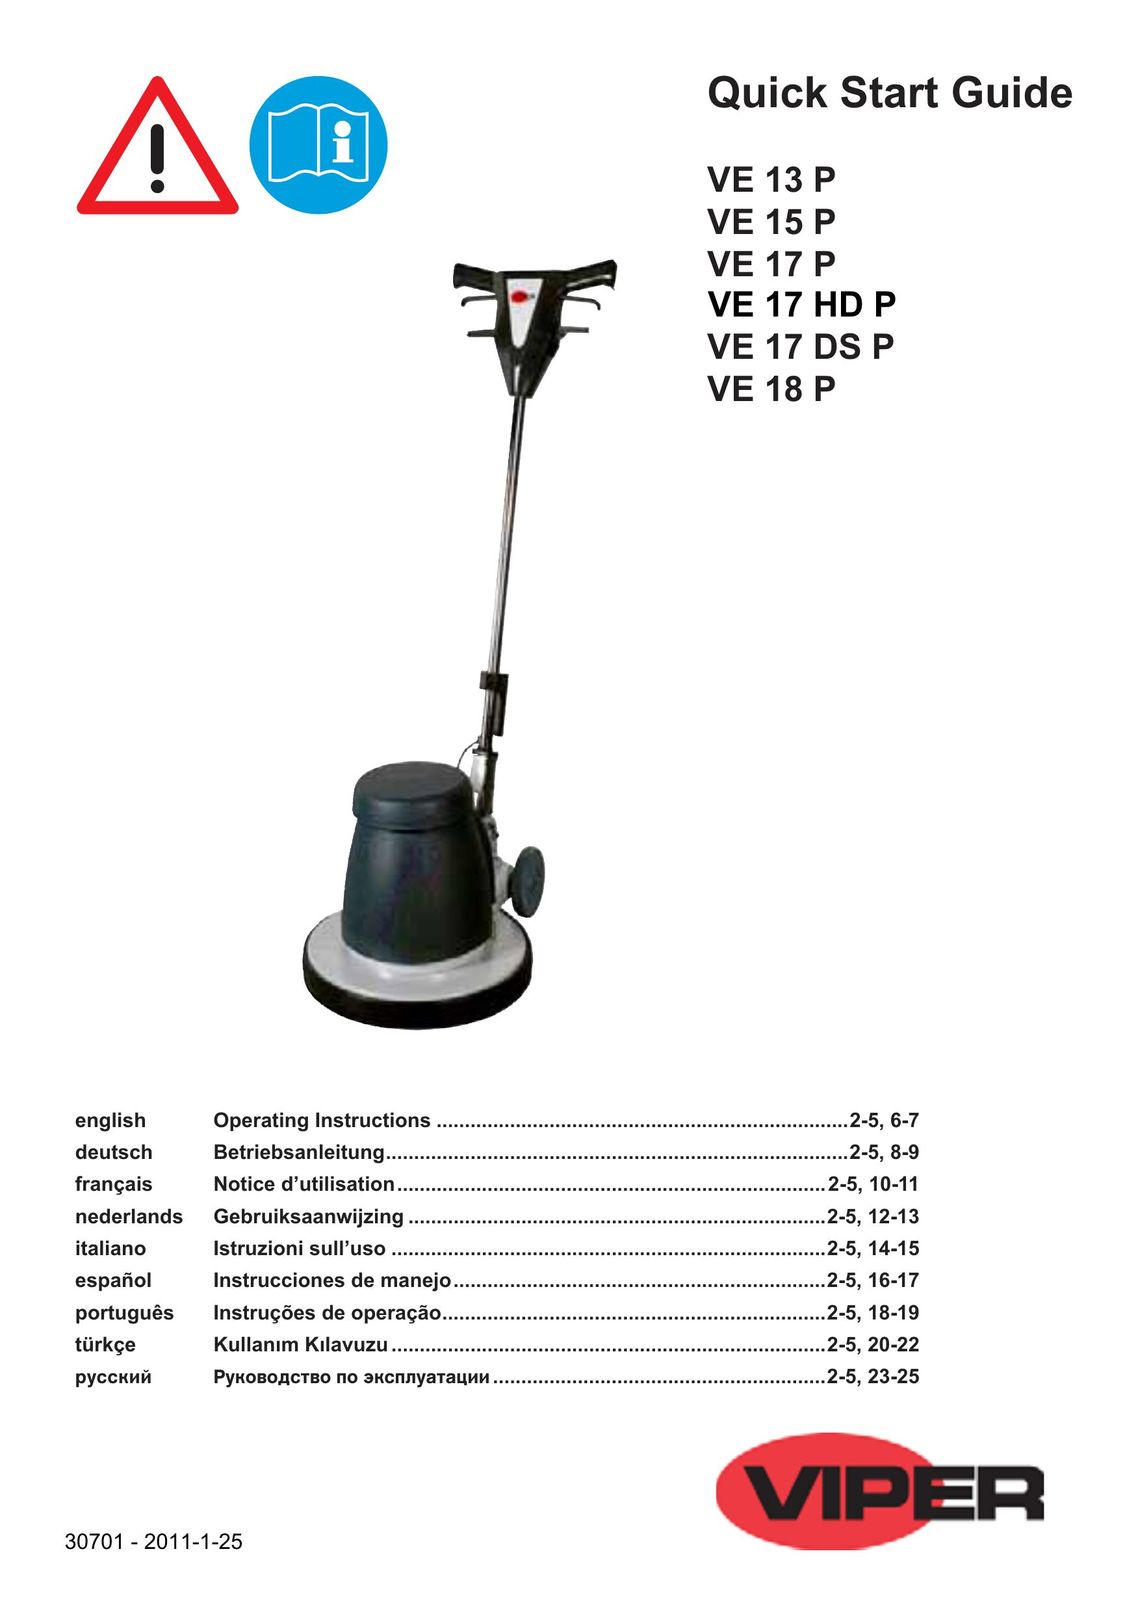 Viper VE 17 HD P Carpet Cleaner User Manual